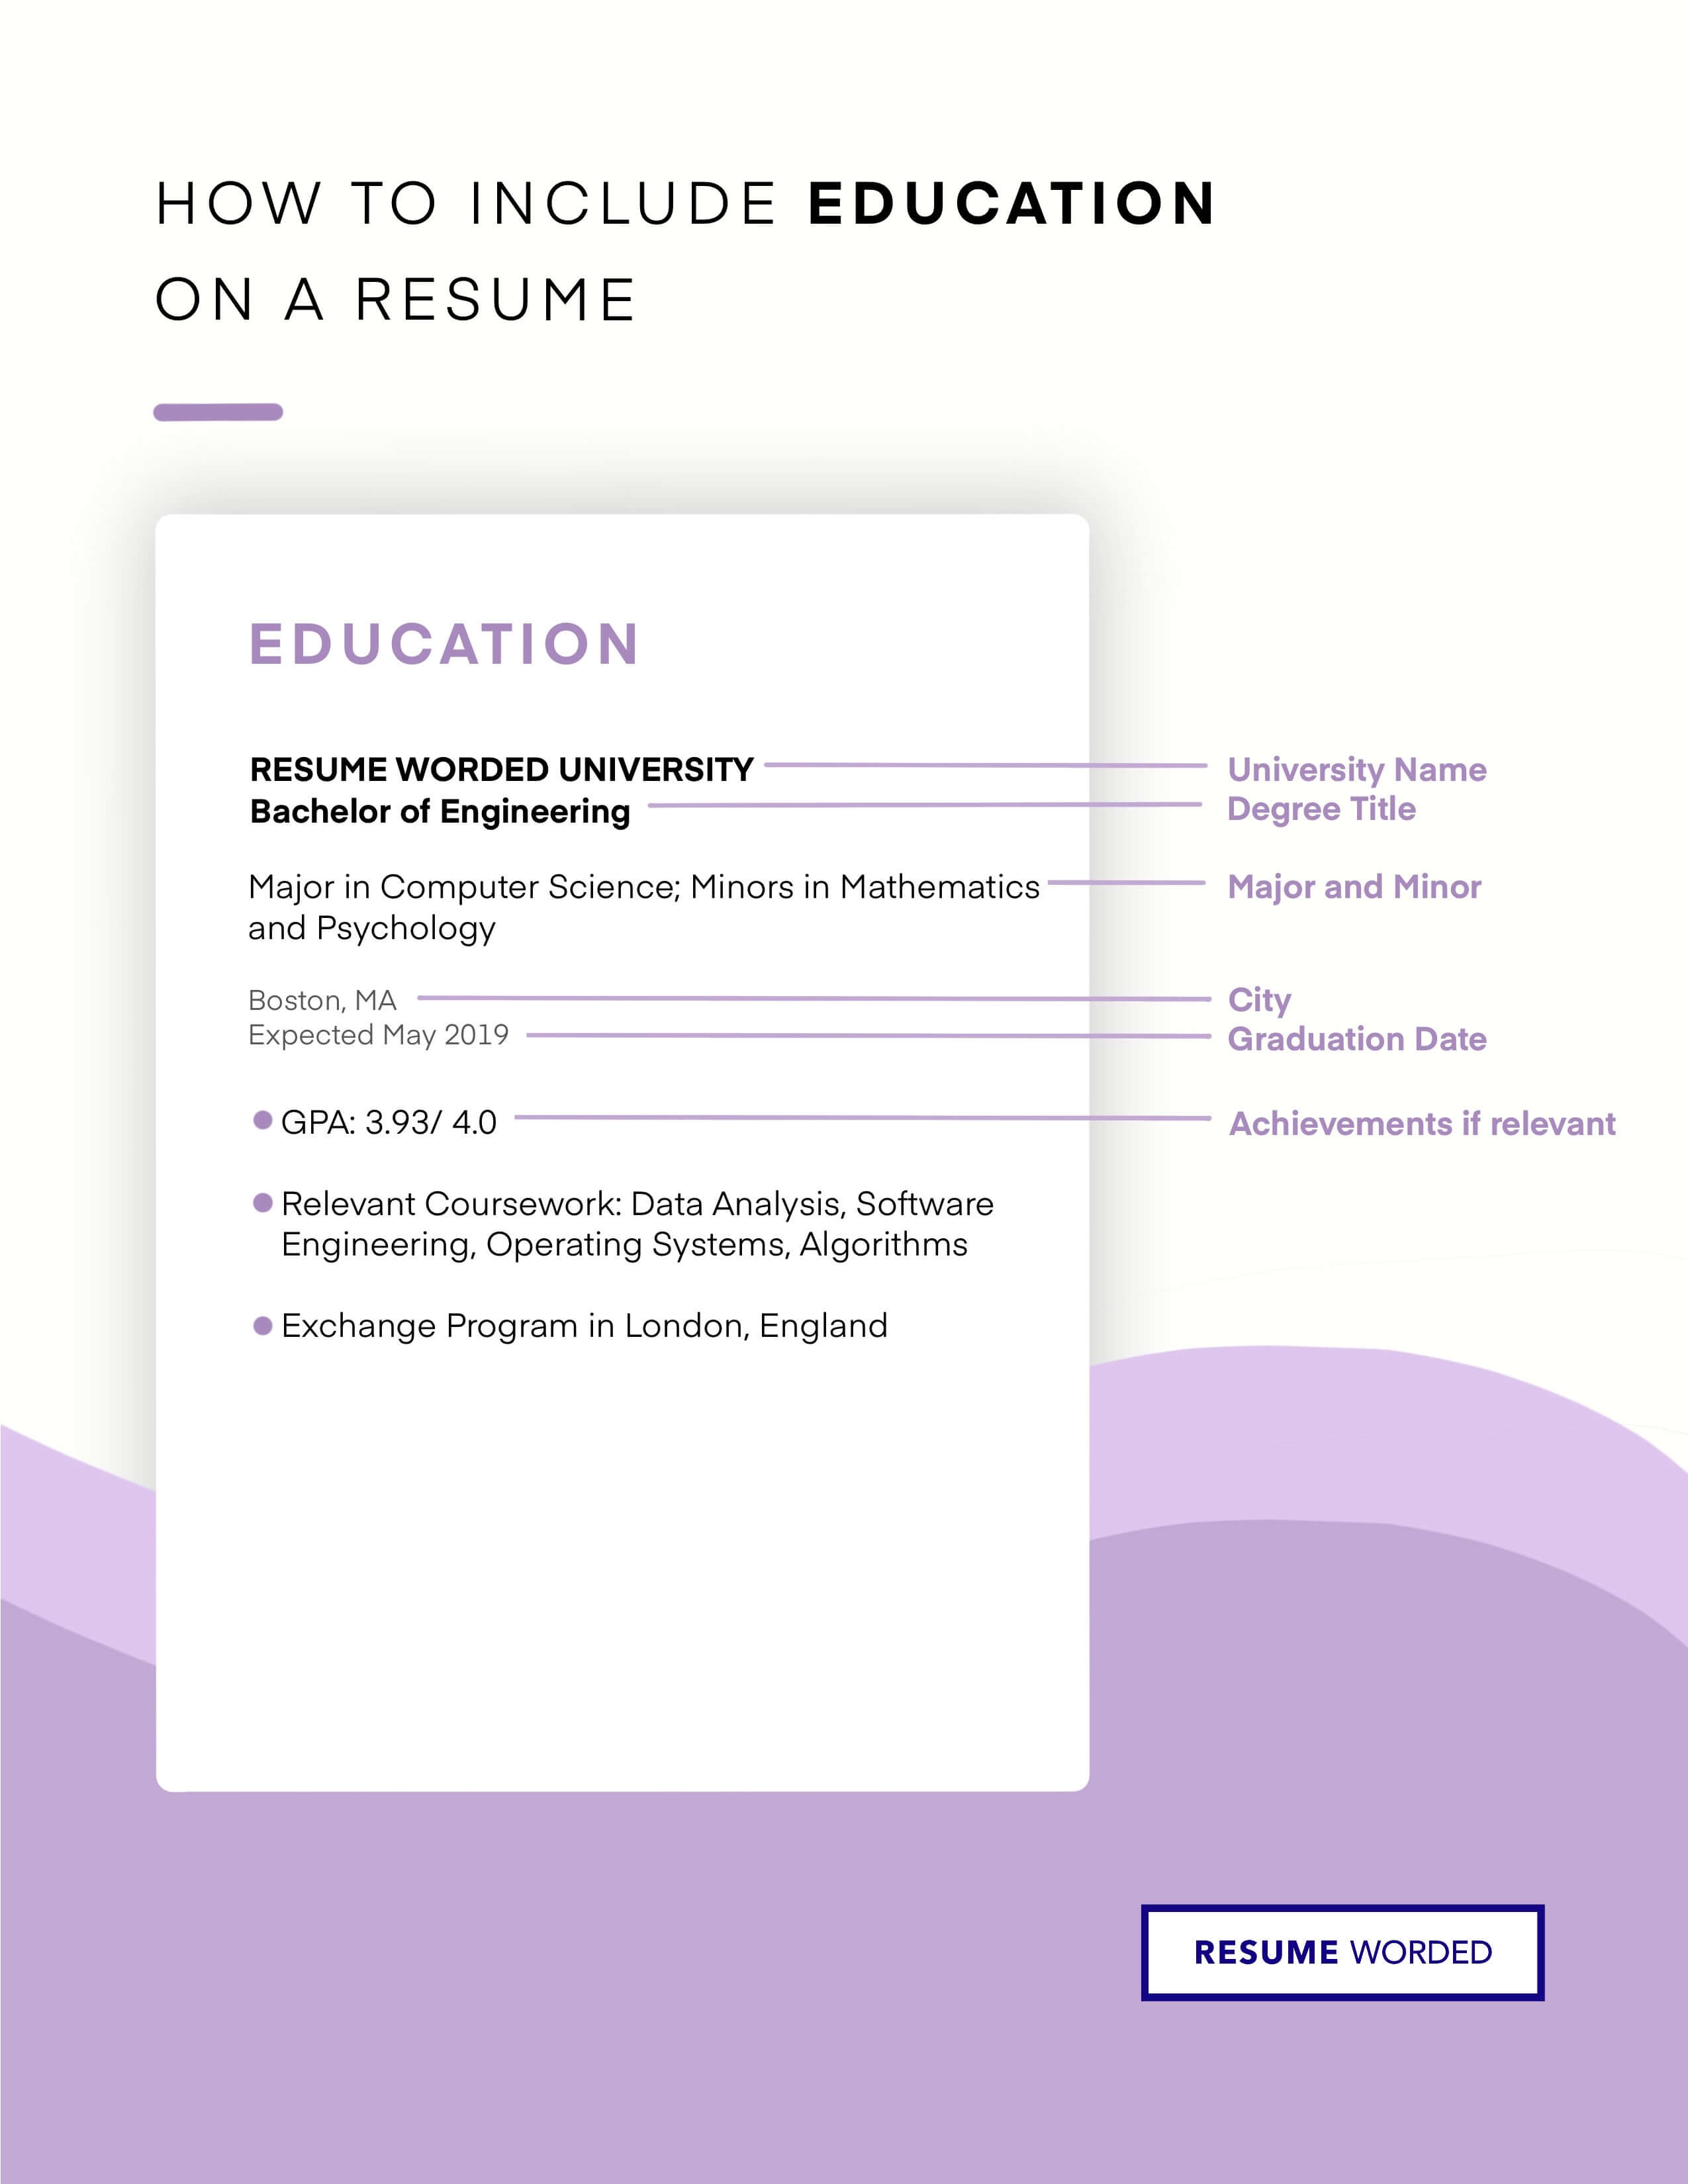 Emphasis on education - Entry-Level Resume